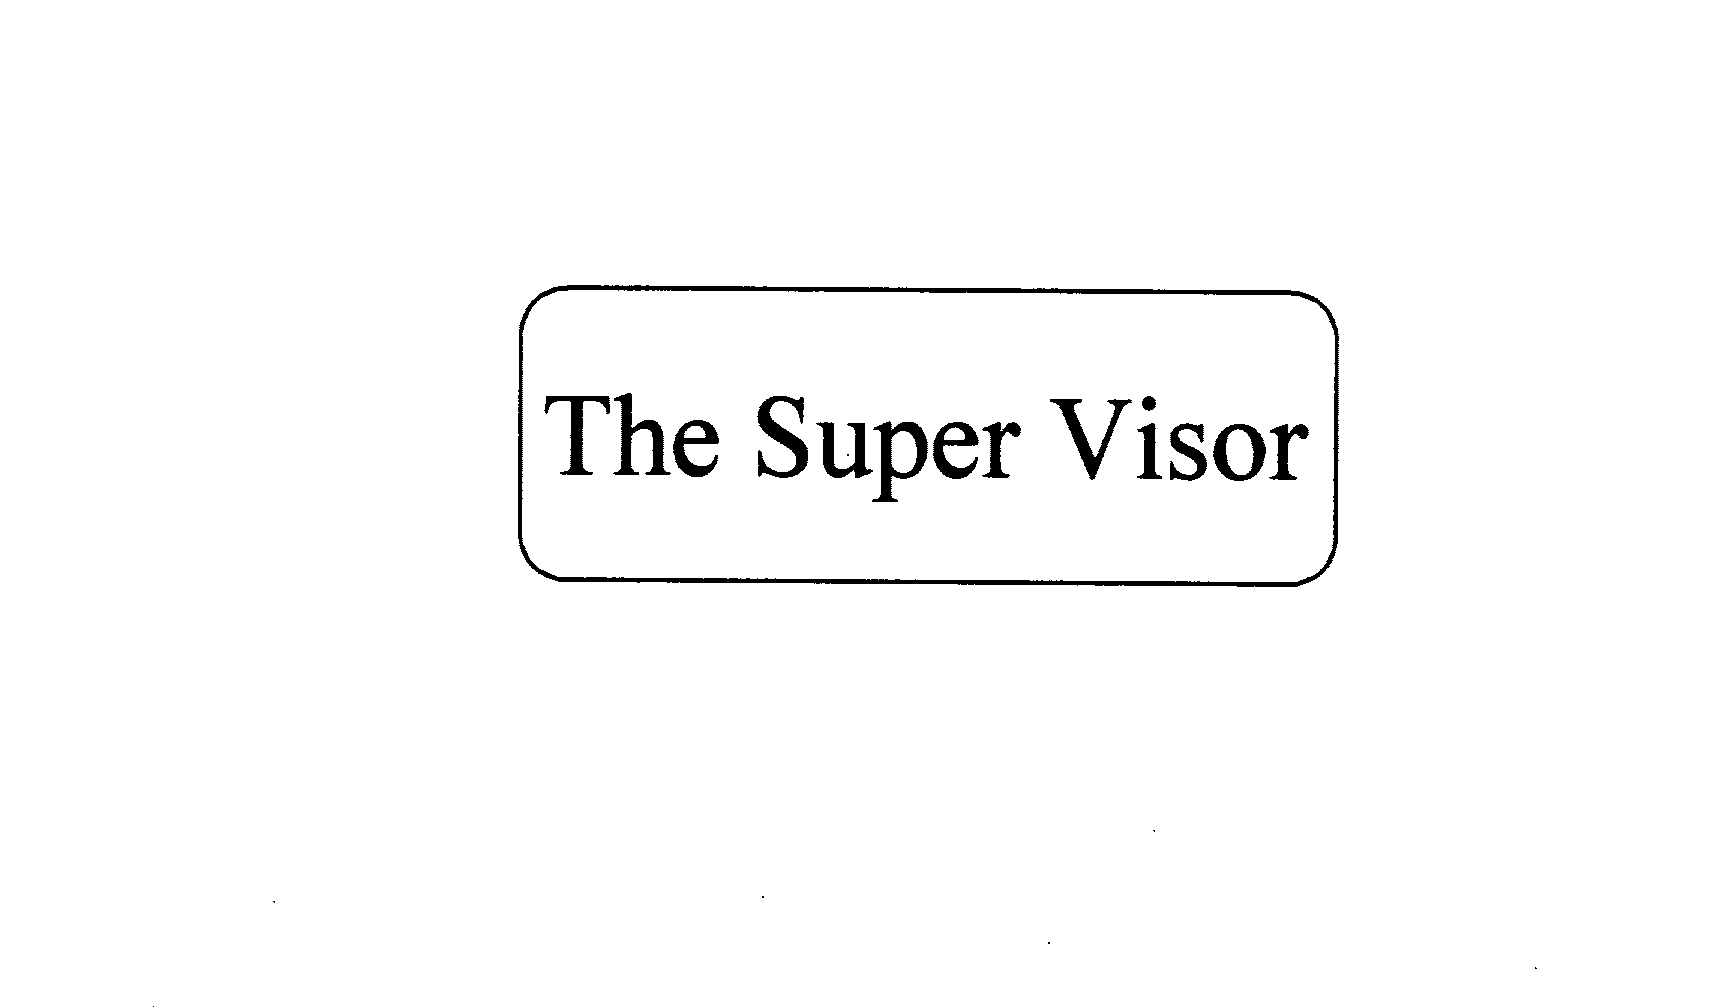  THE SUPER VISOR